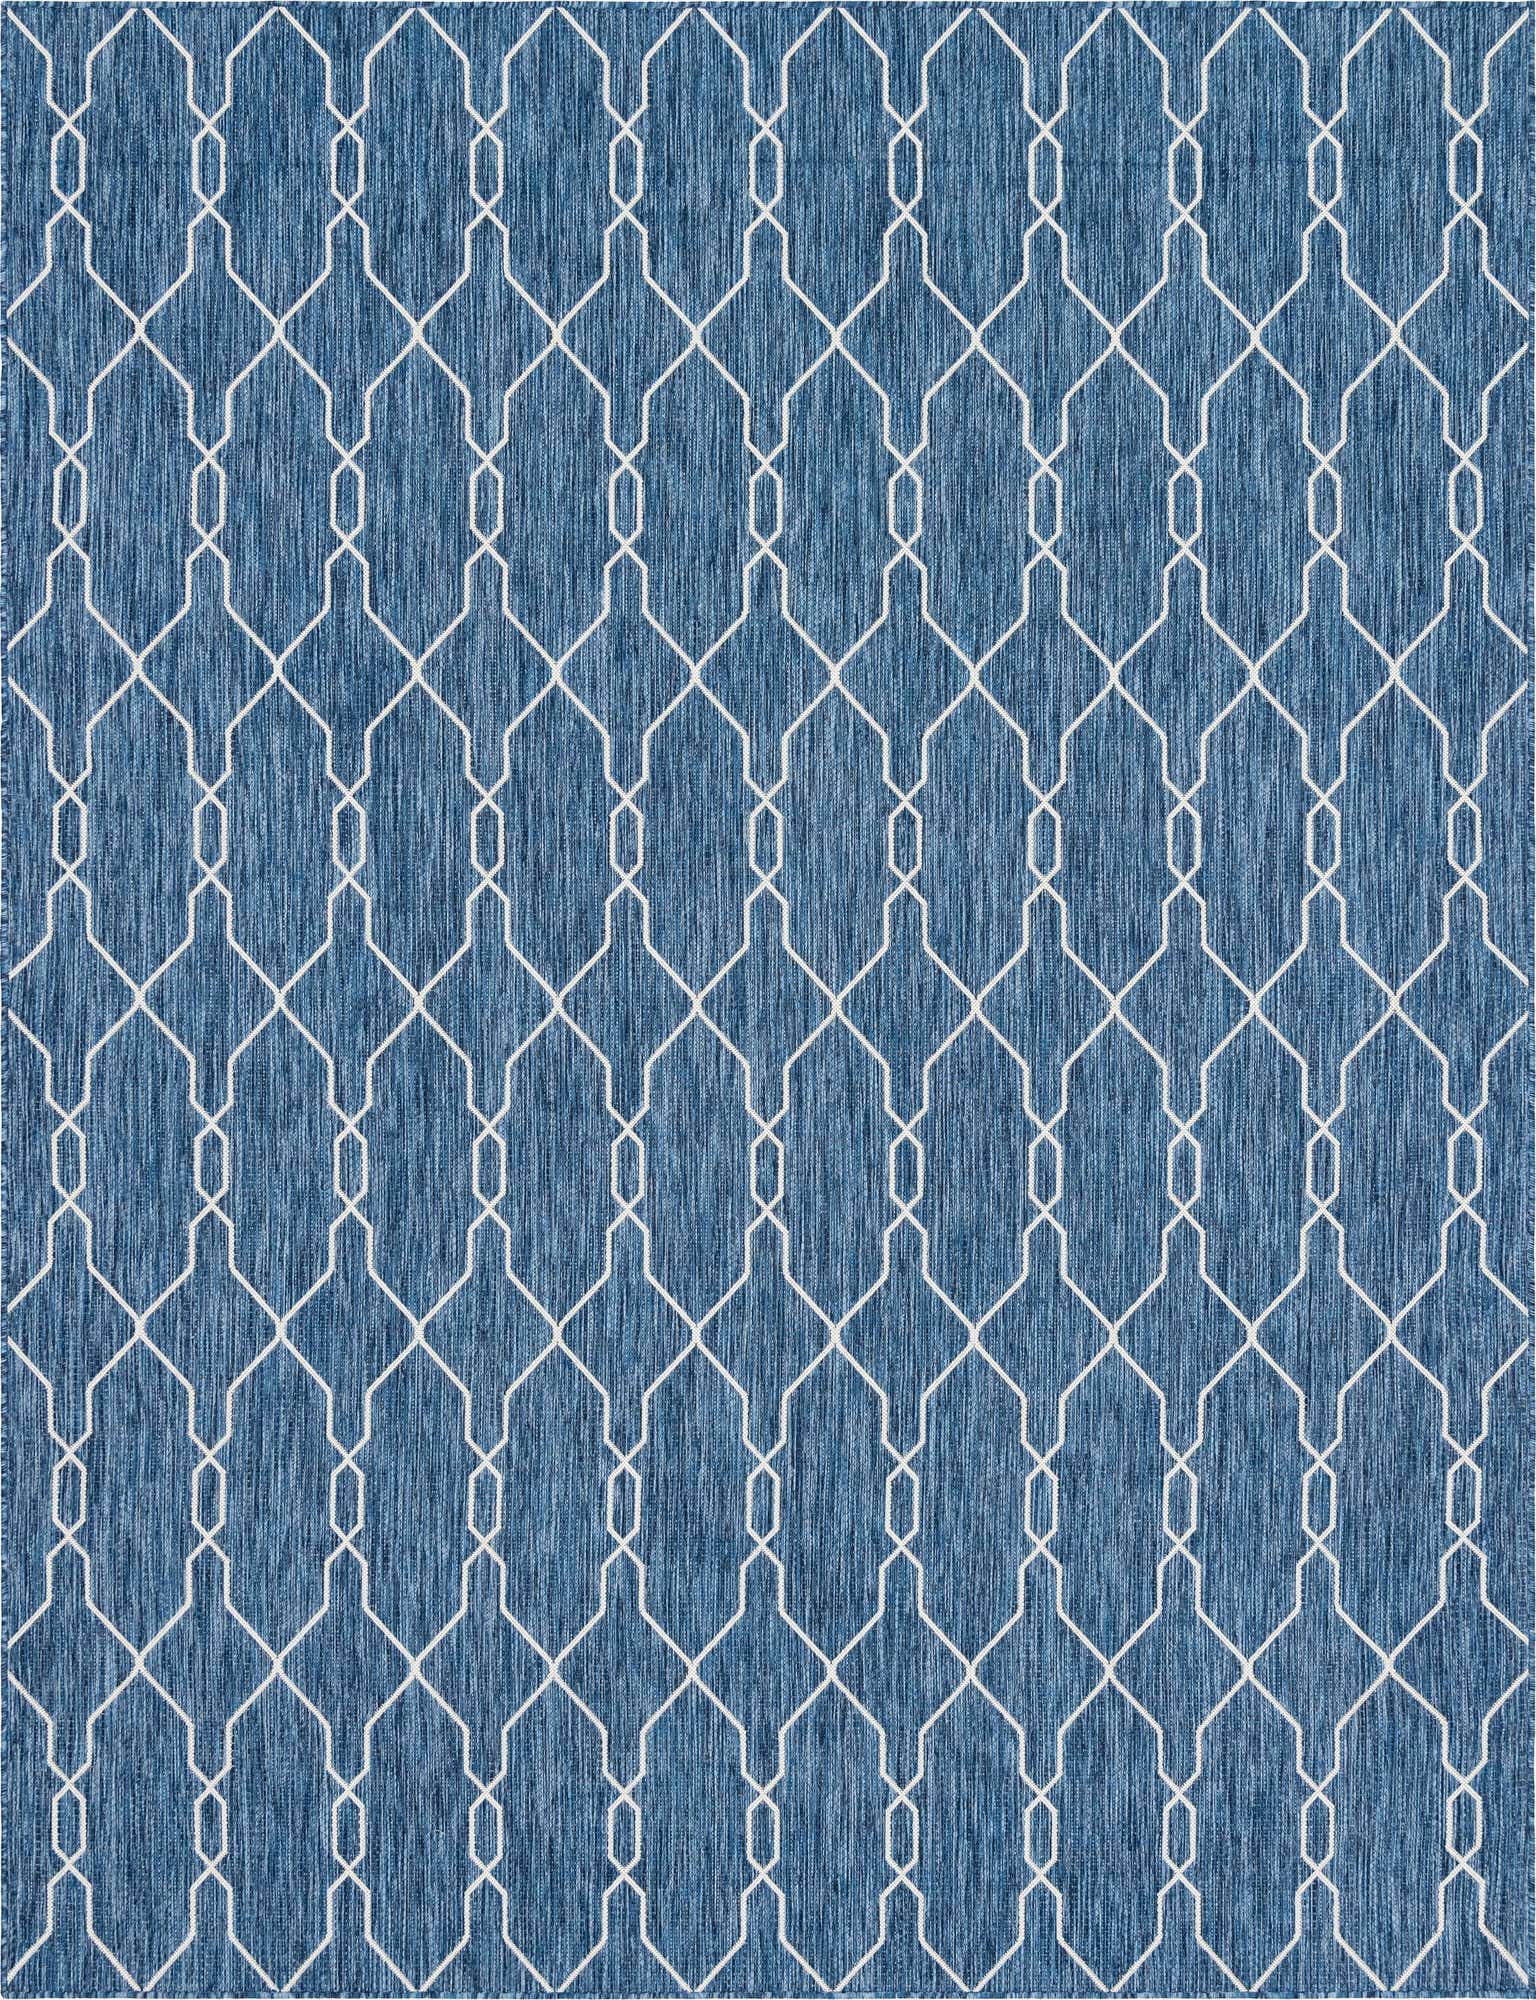 Tapis de jardin extérieur bleu motifs scandinave 120x160cm